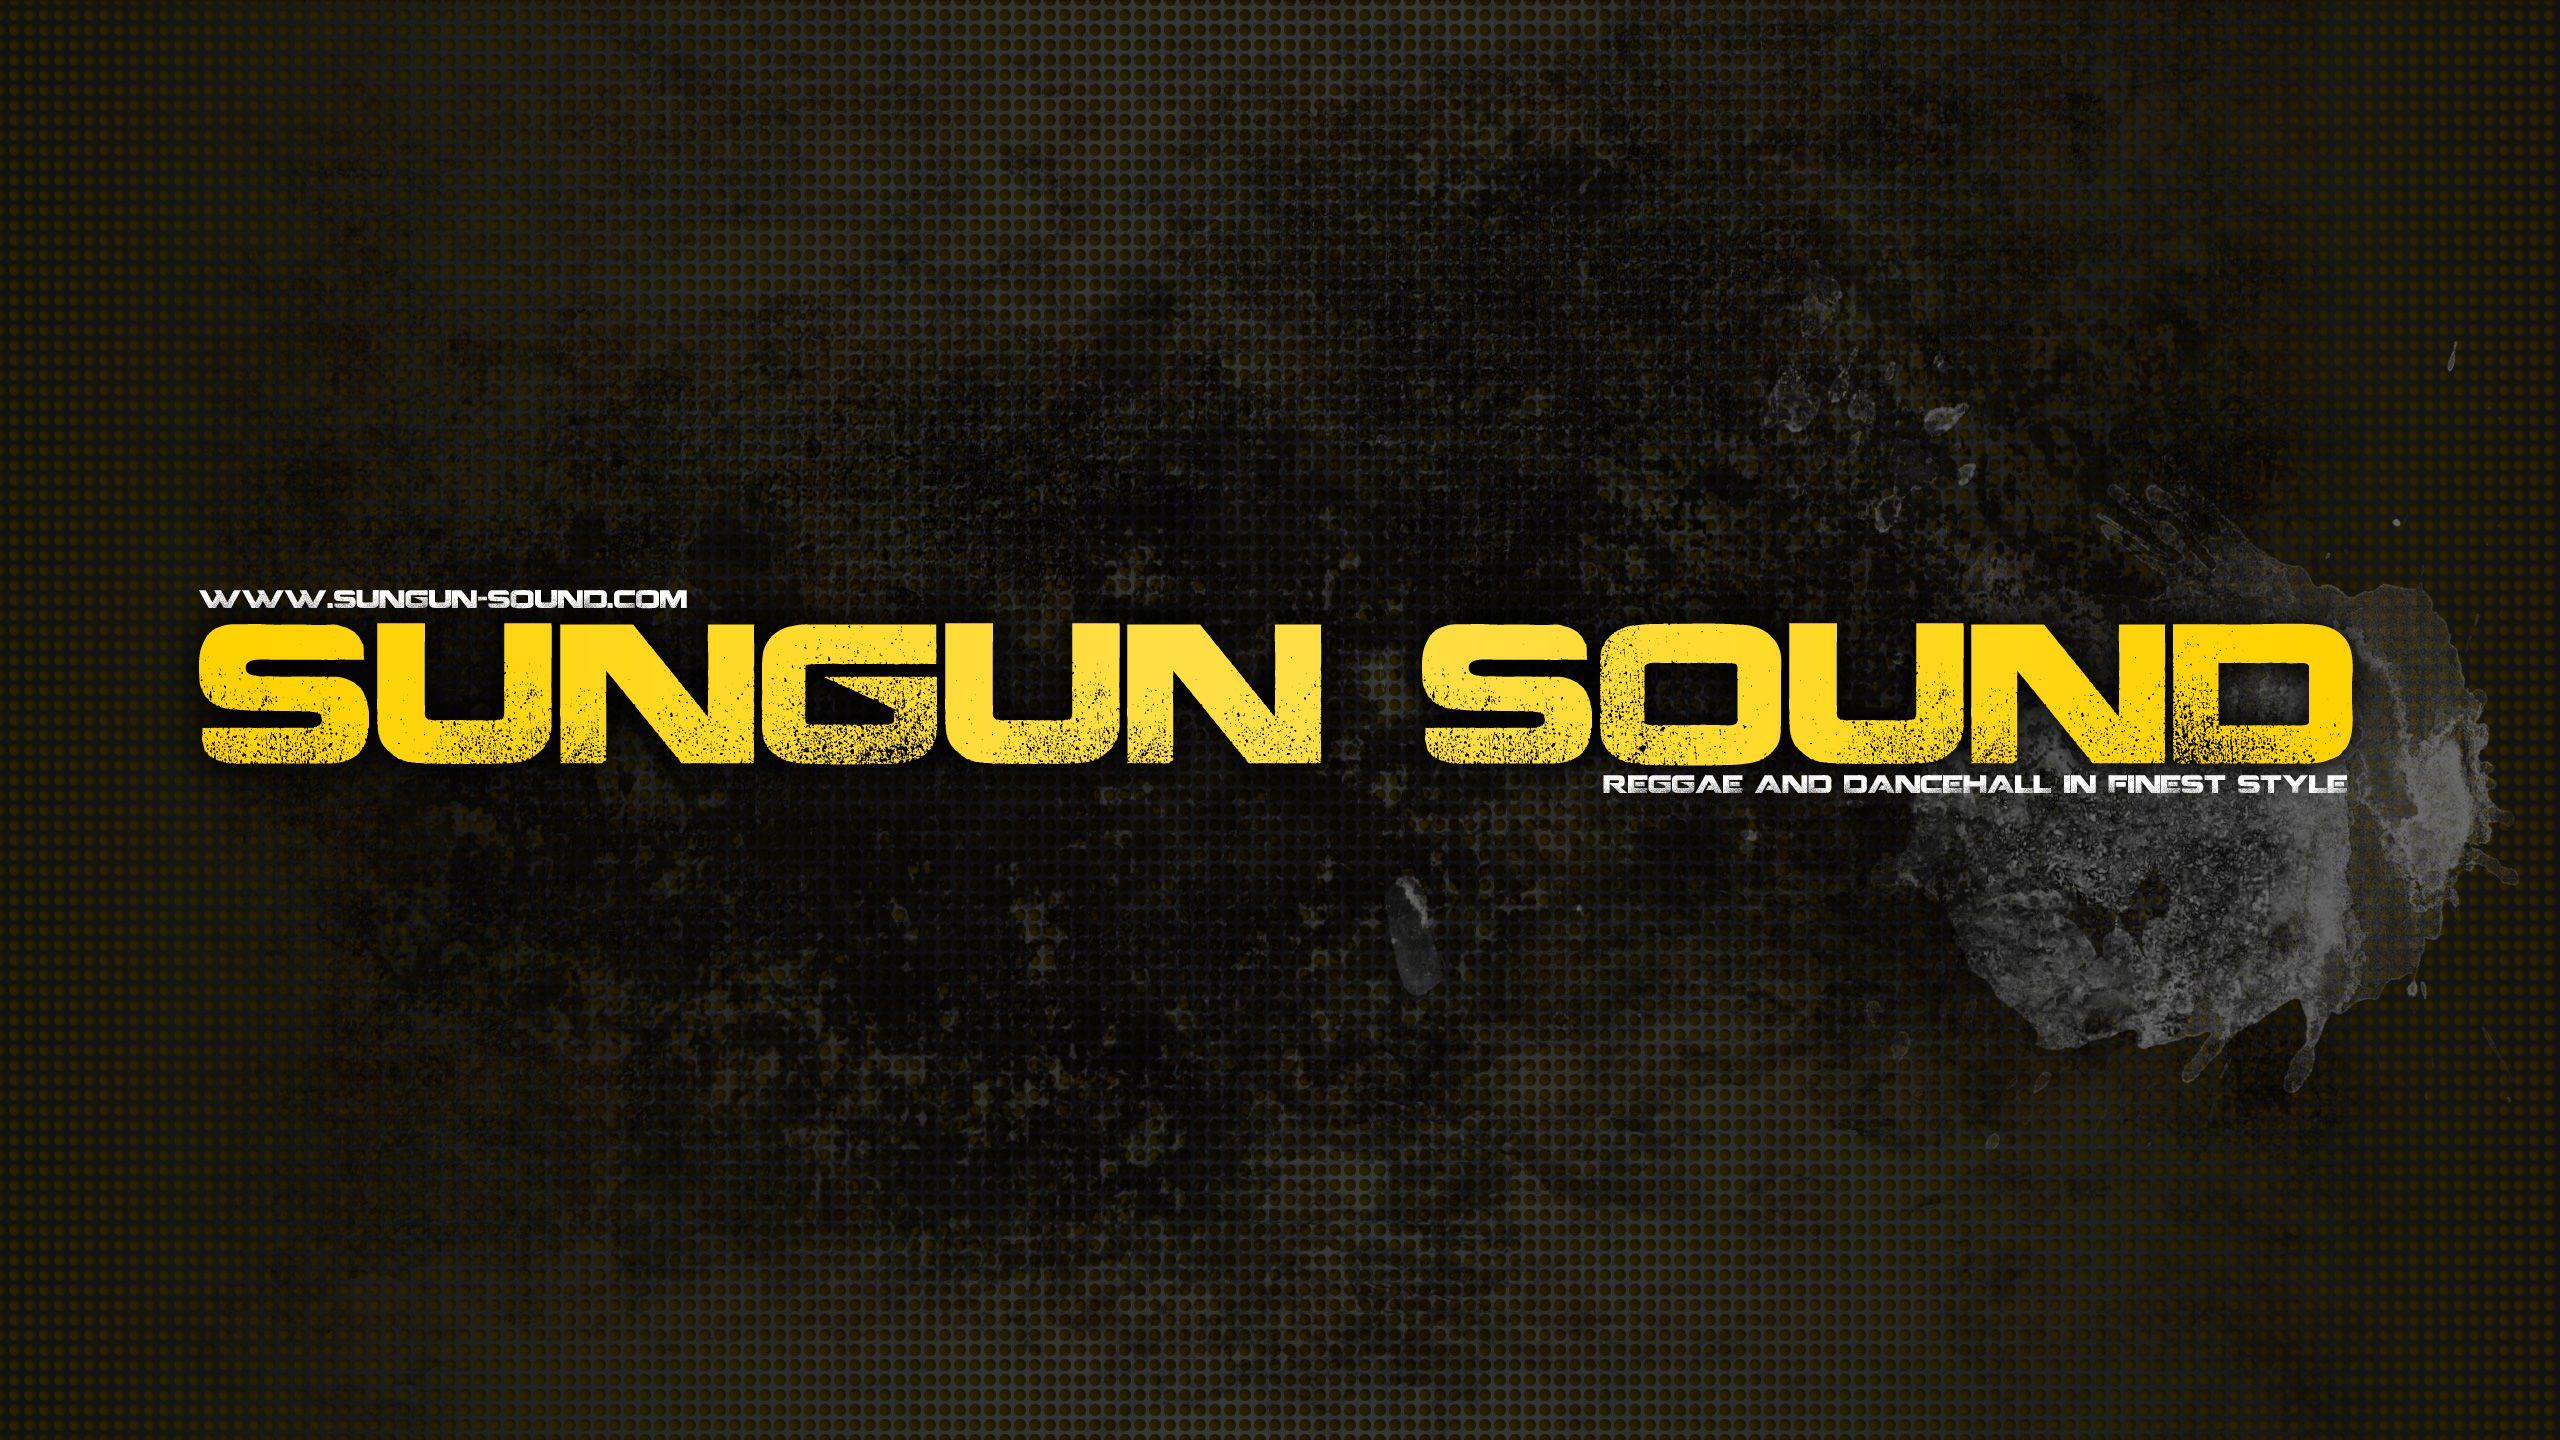 Sungun Sound. Reggae, Dancehall, Dubplates and more. since 2009